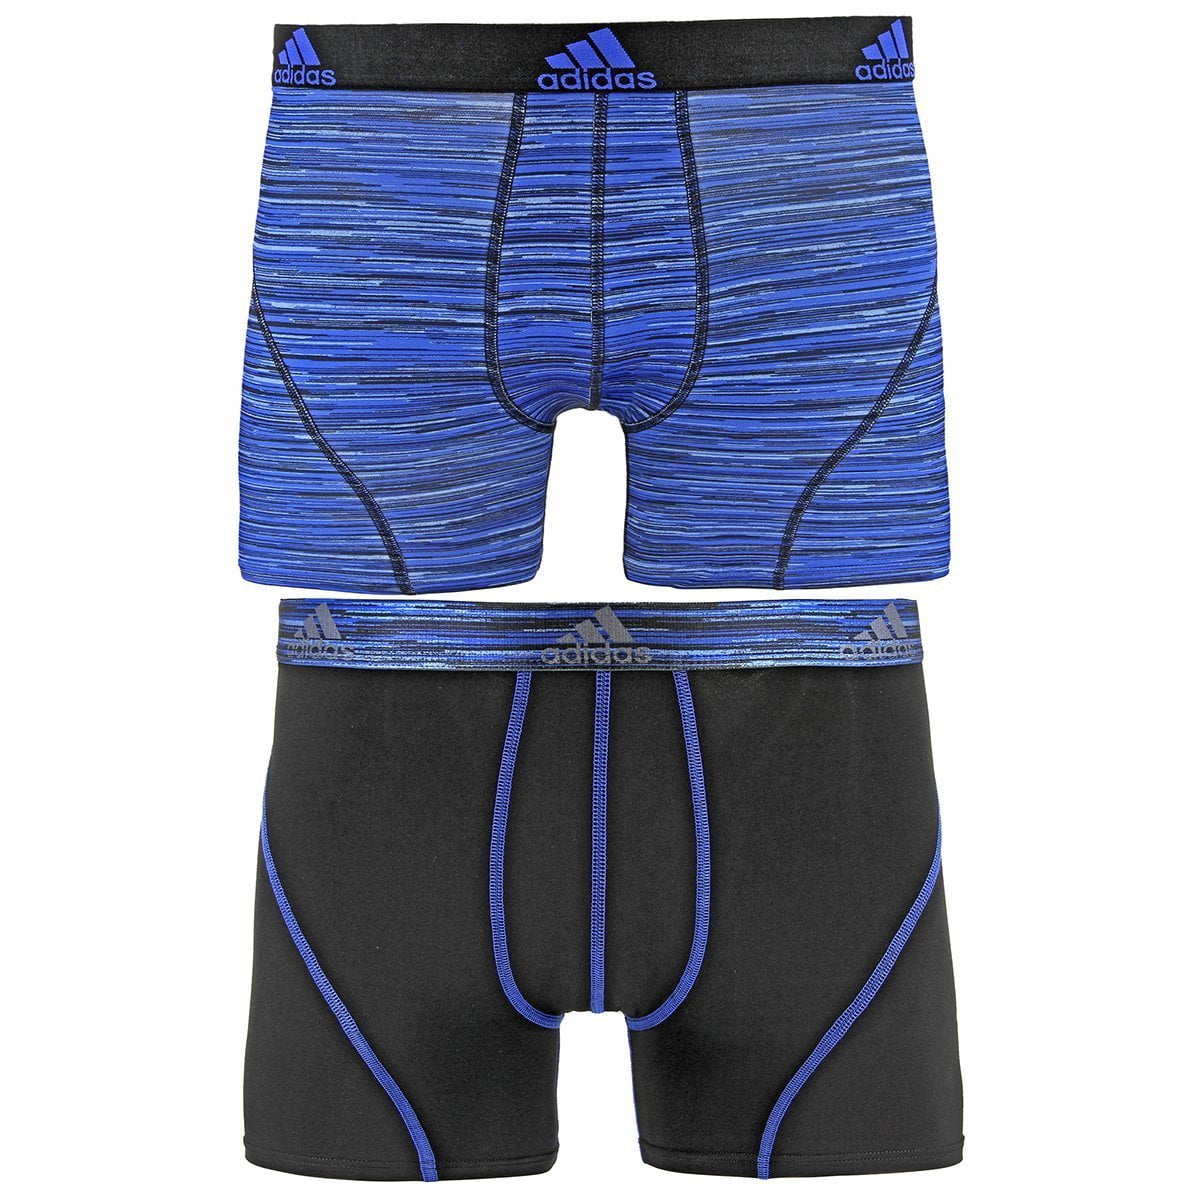 adidas Men's Sport Performance Climalite Trunk Underwear (2 Pack